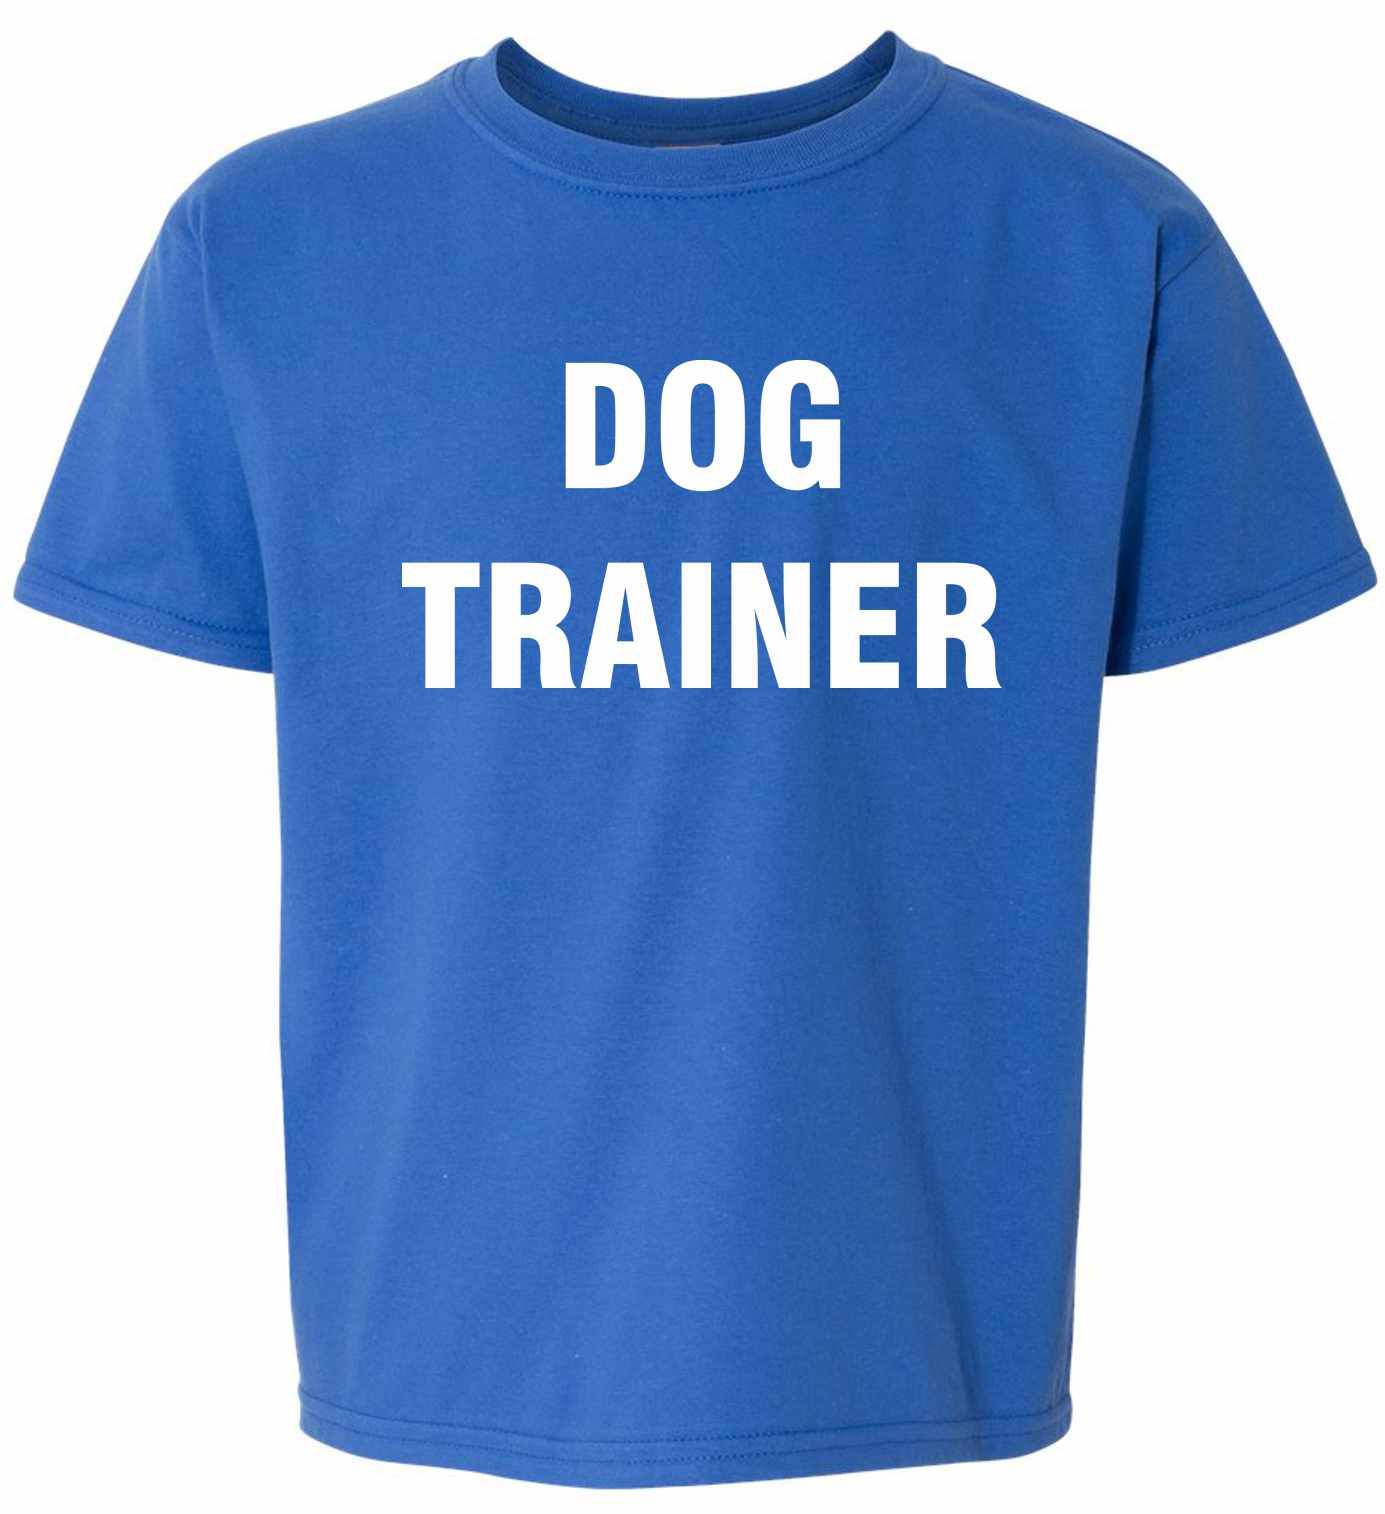 DOG TRAINER on Kids T-Shirt